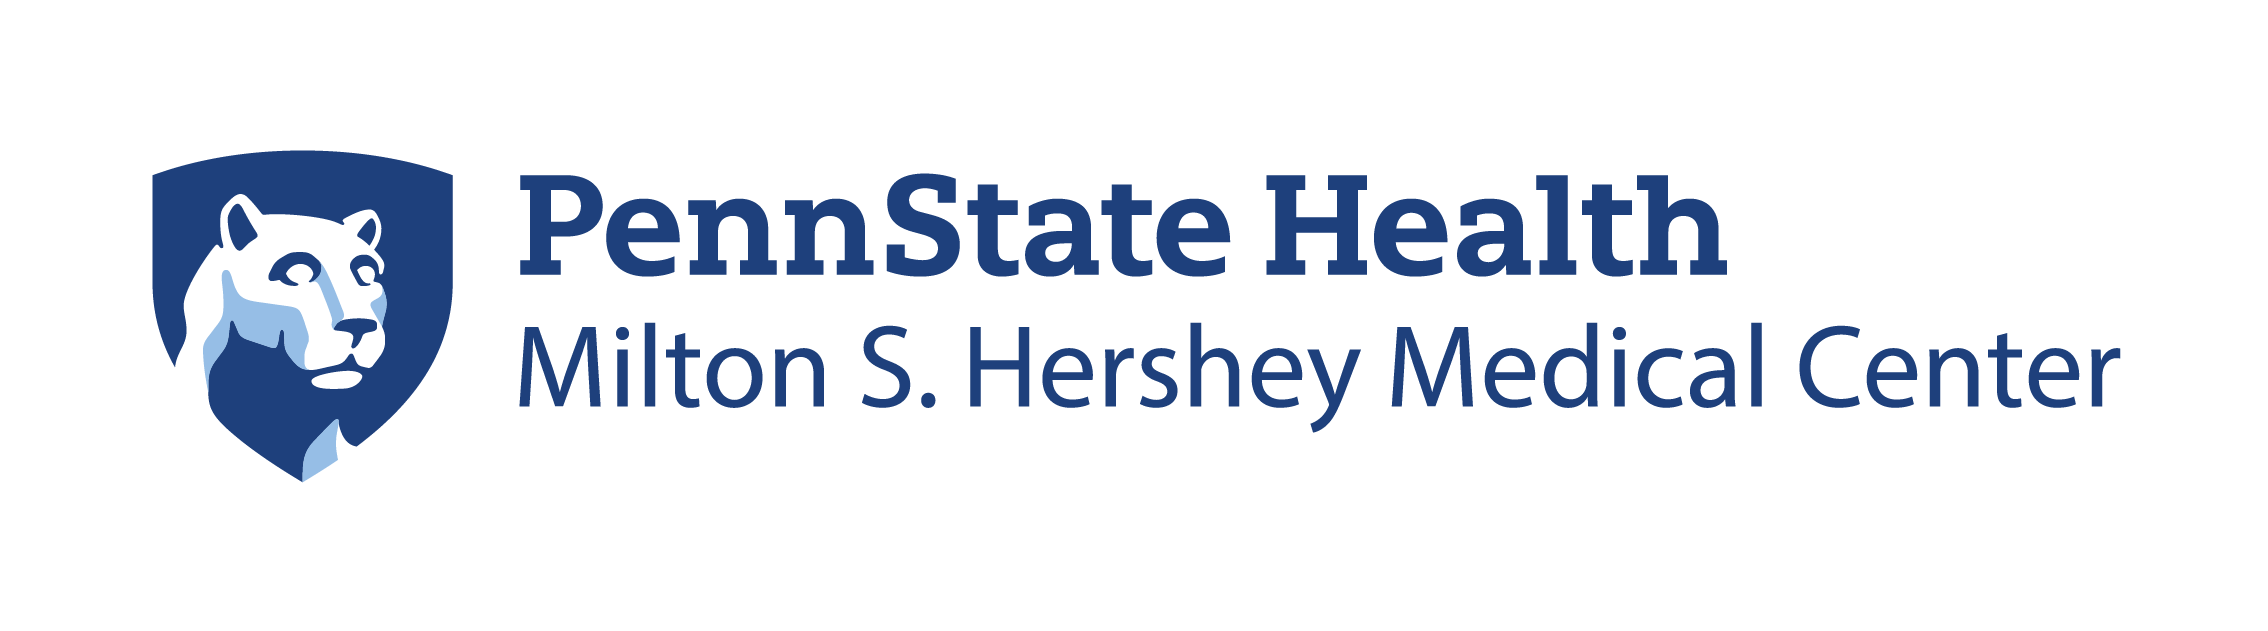 Penn State health